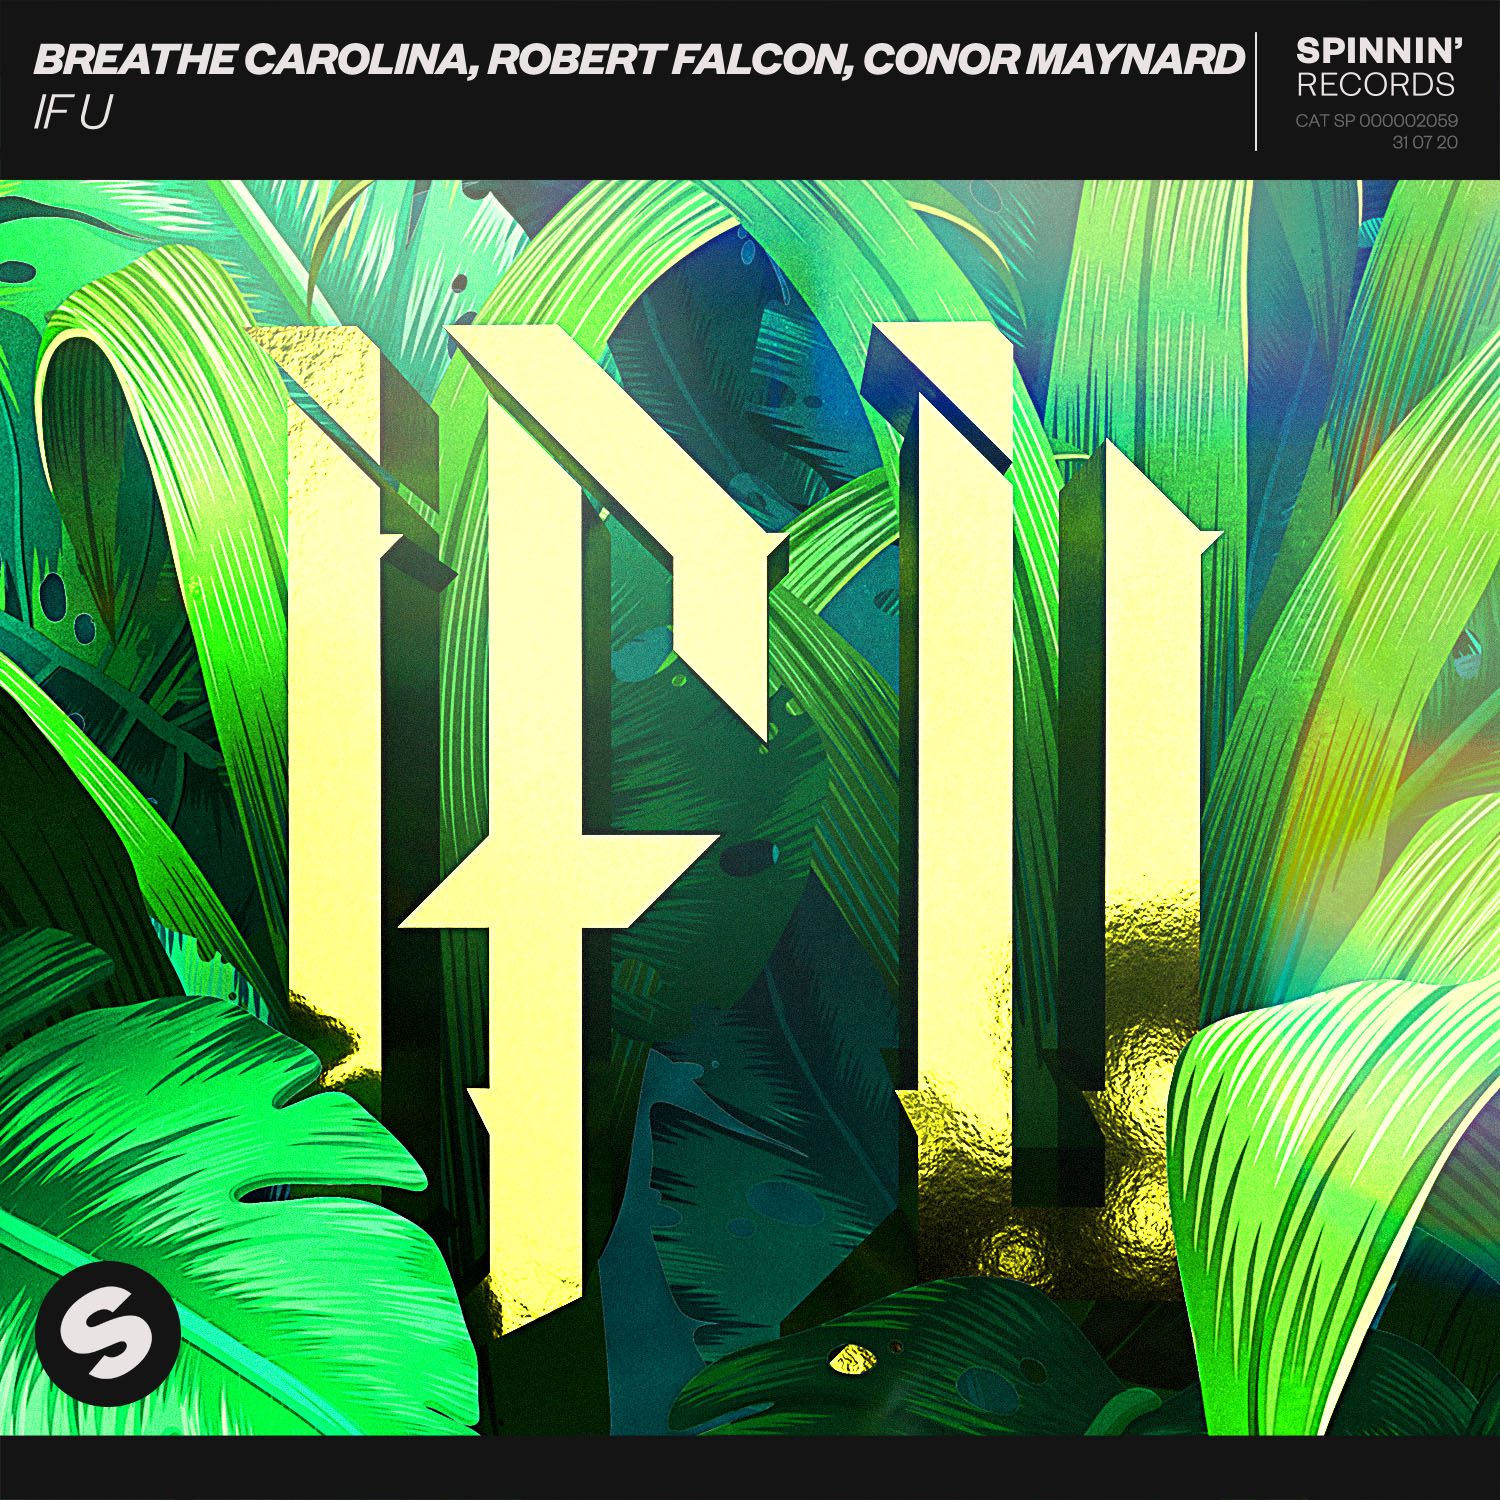 Breathe Carolina, Robert Falcon, Conor Maynard – IF U